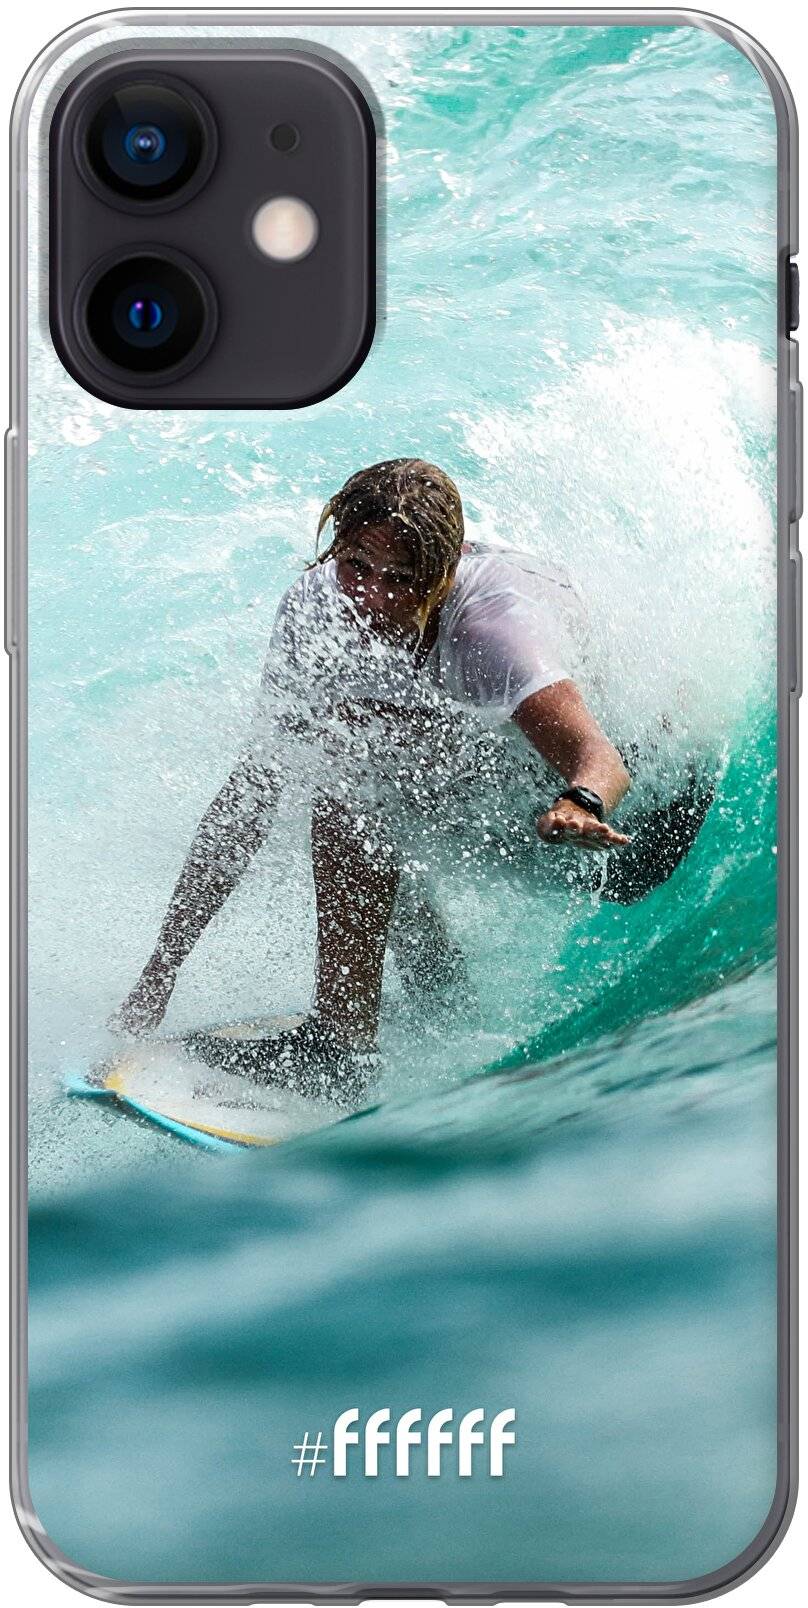 Boy Surfing iPhone 12 Mini